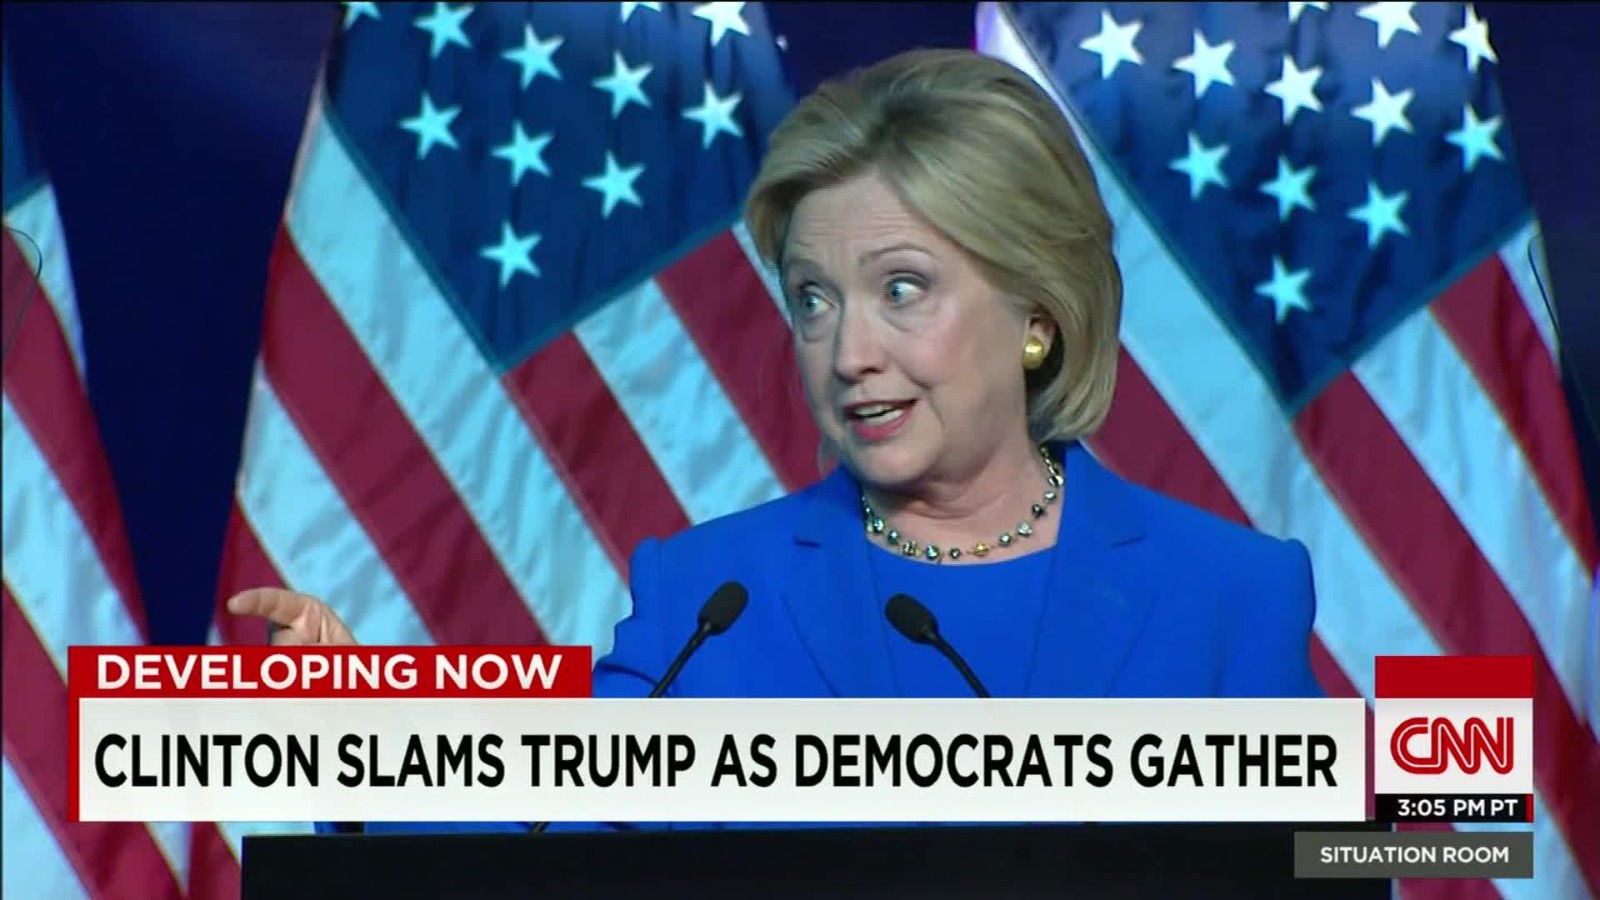 Clinton compares GOP views on women to terrorist groups CNN Video